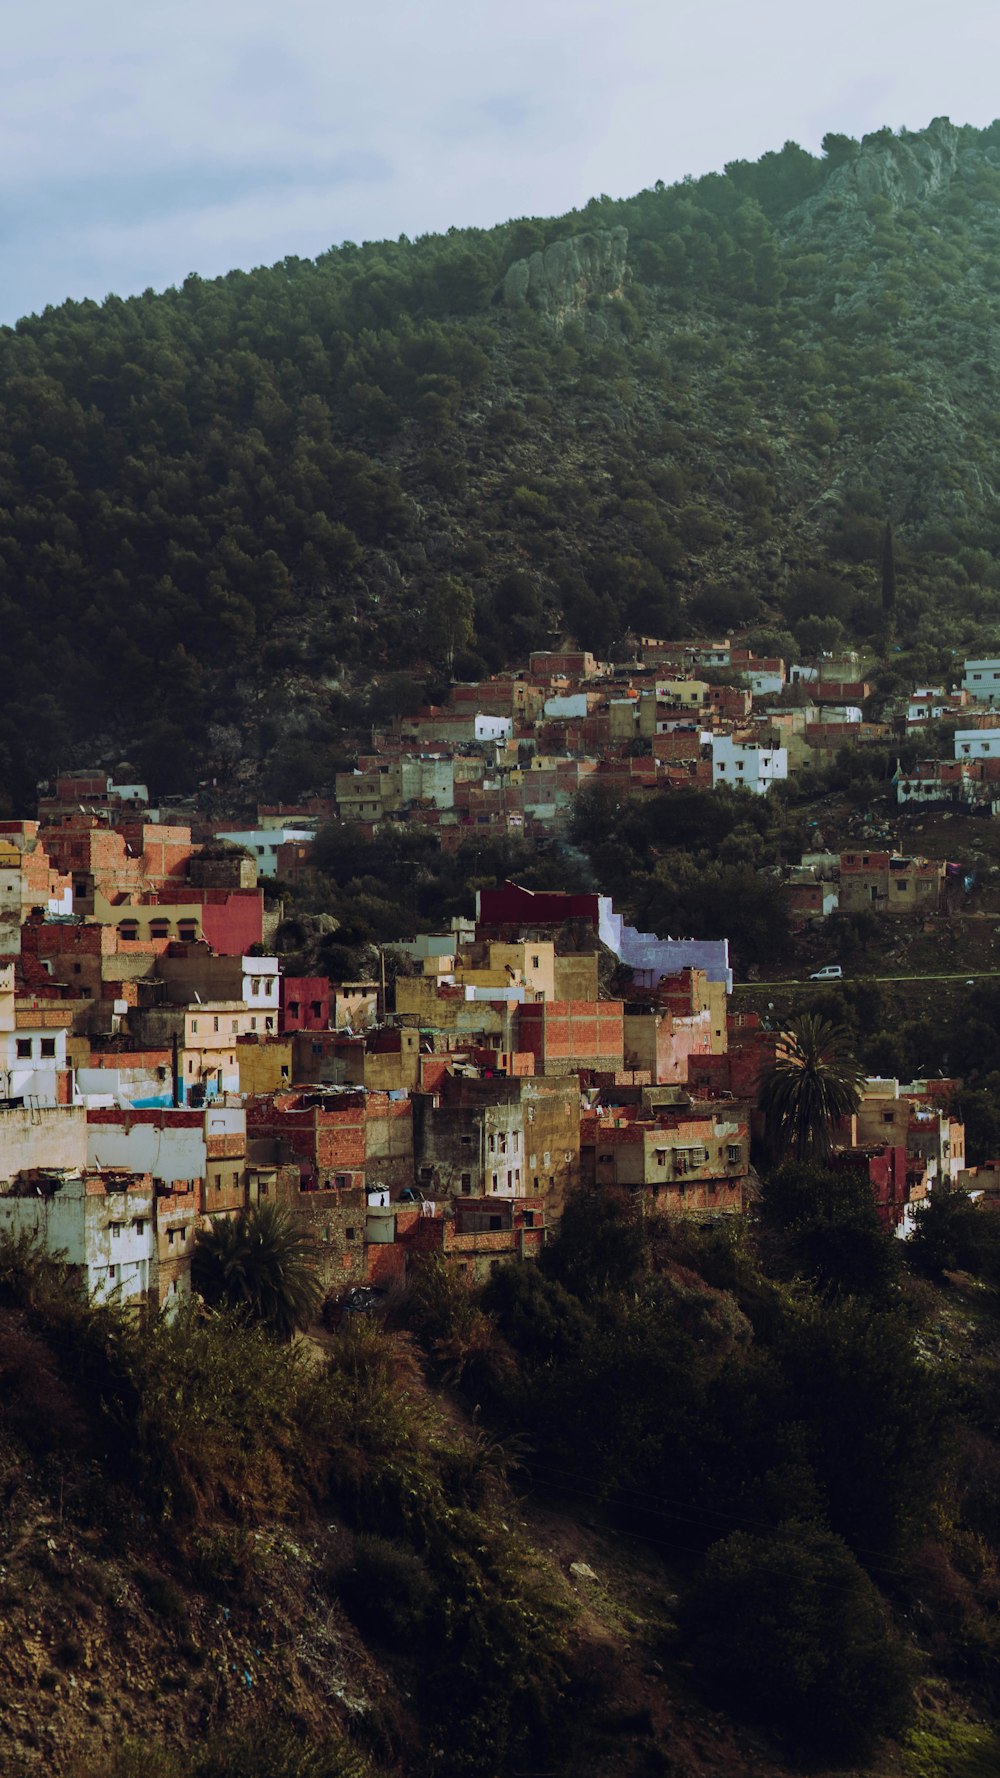 a hillside with a village on it